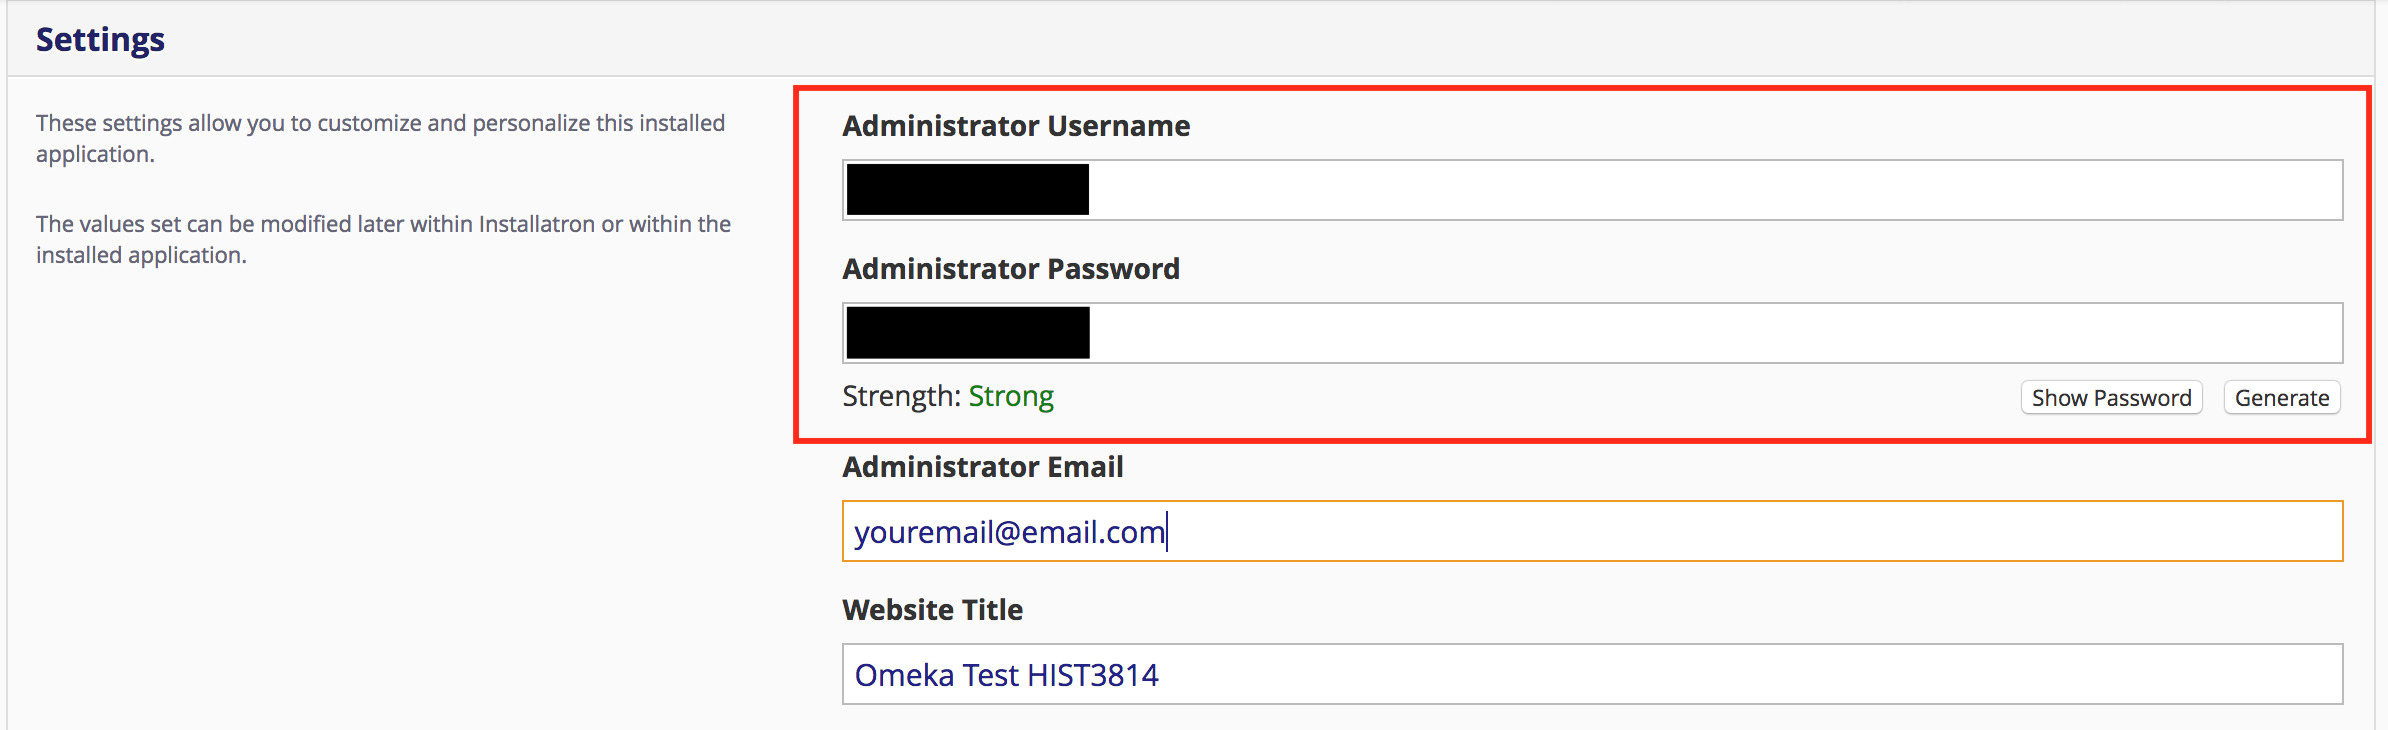 Image showing Omeka login and admin information